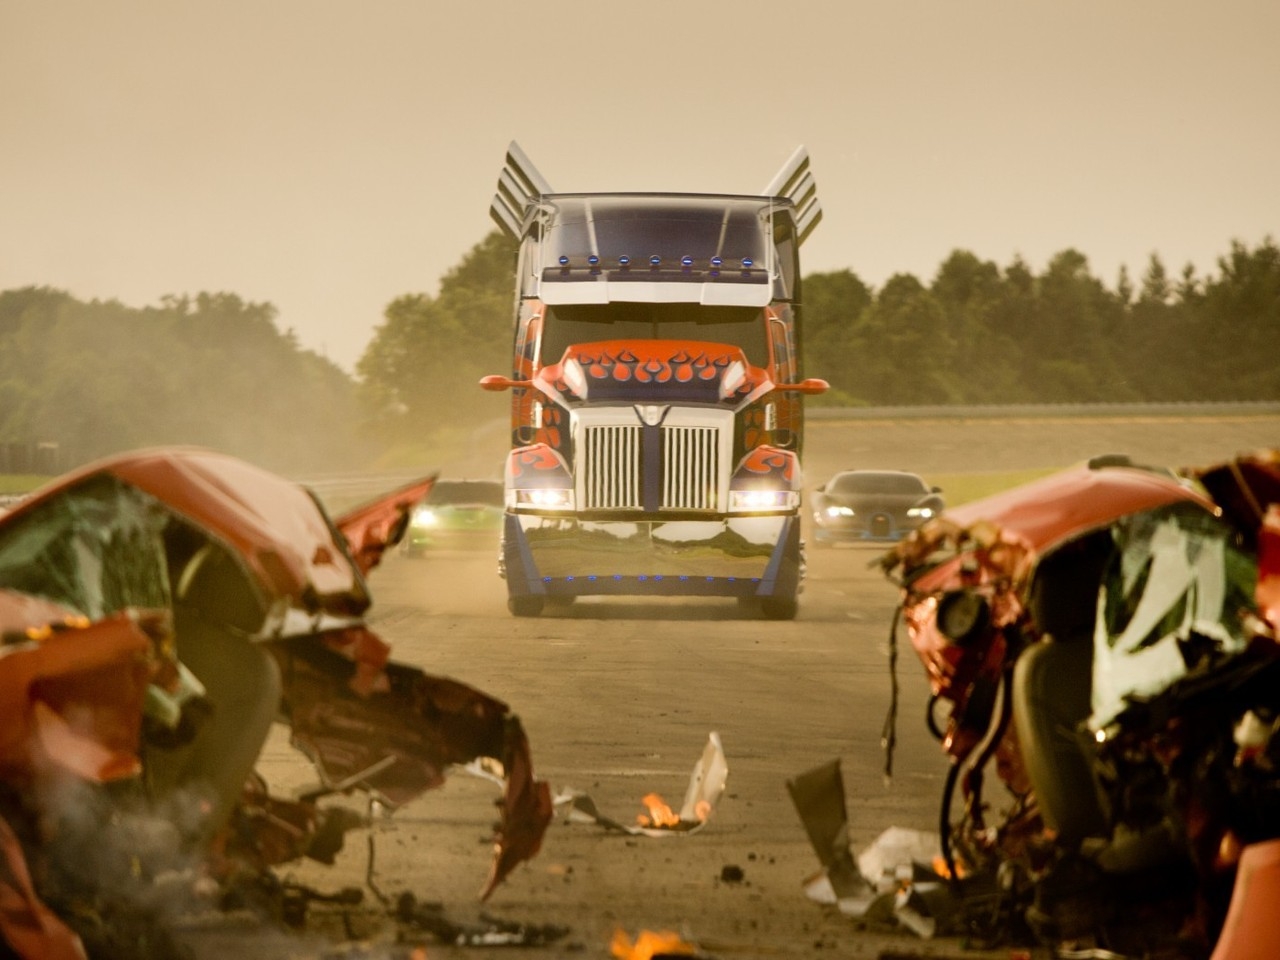 Transformers The Era of Destruction for 1280 x 960 resolution